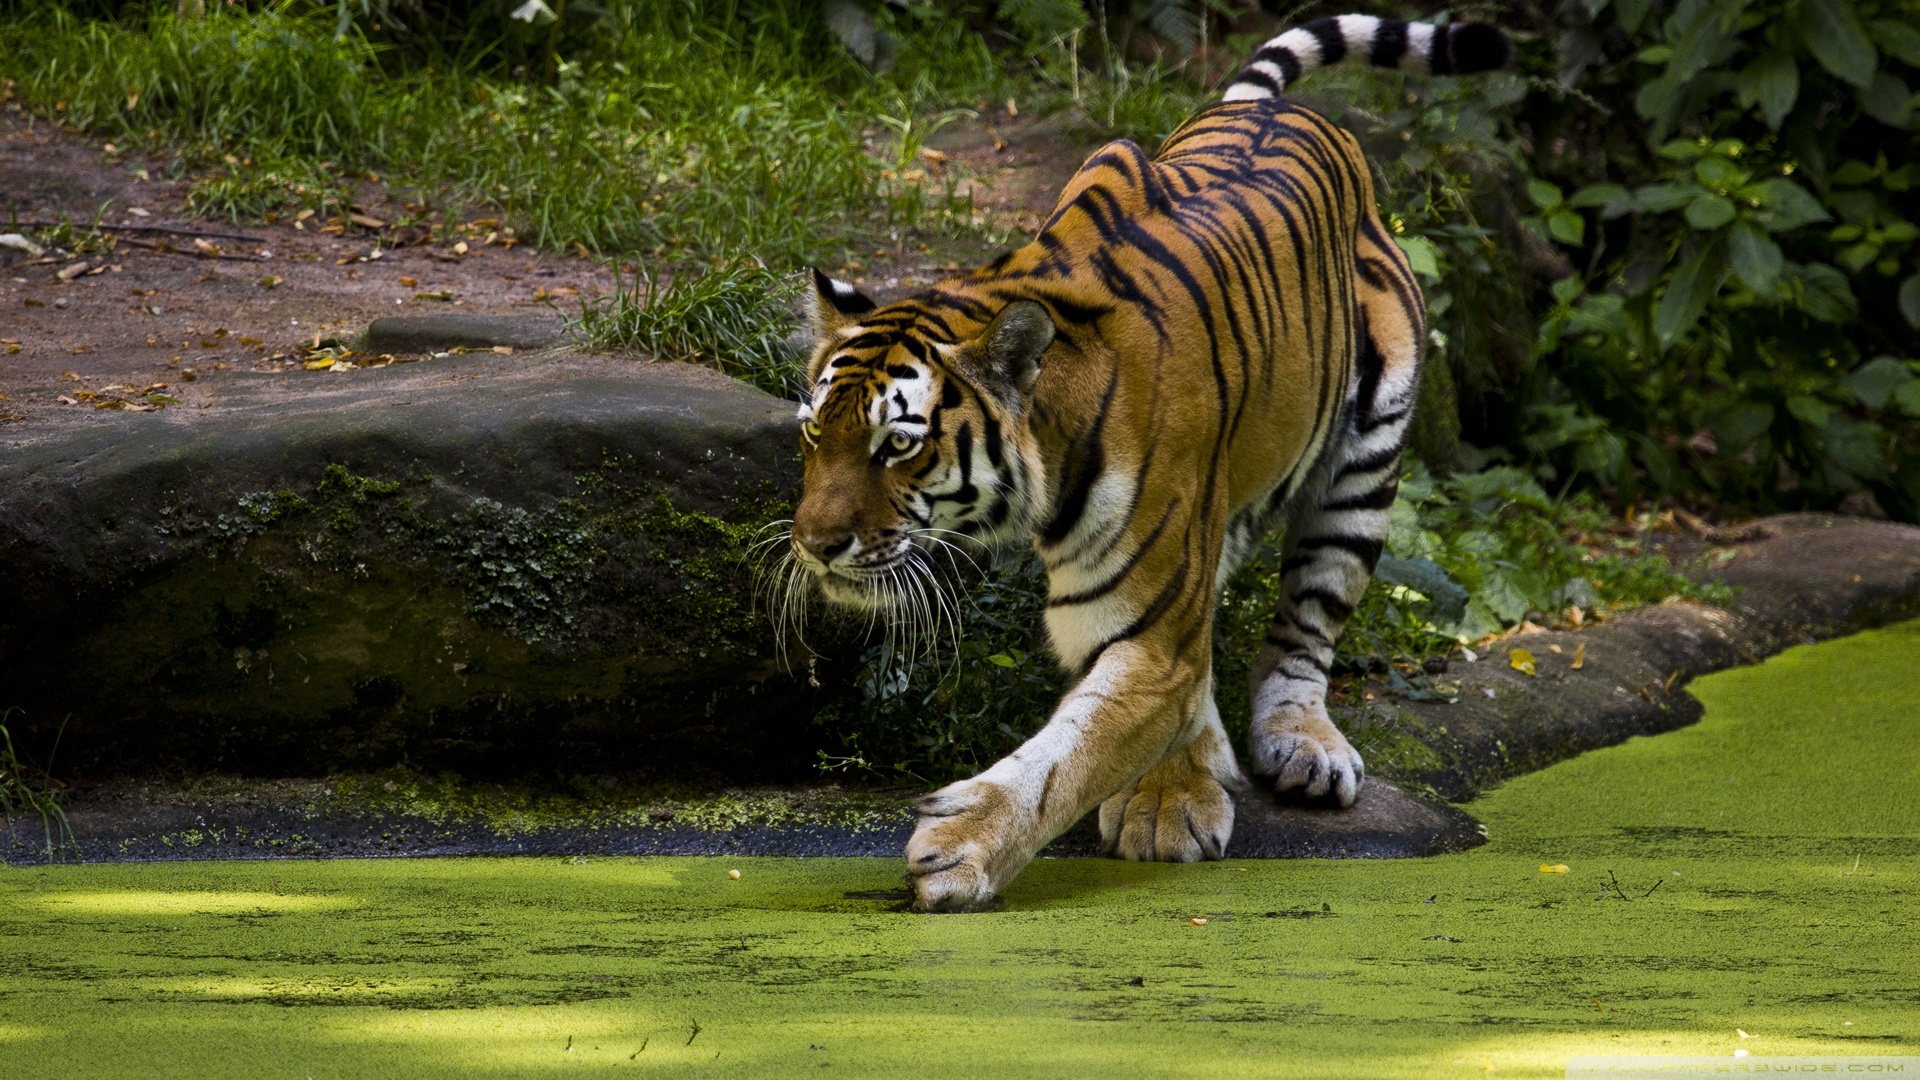 Beautiful Tigers Animals1